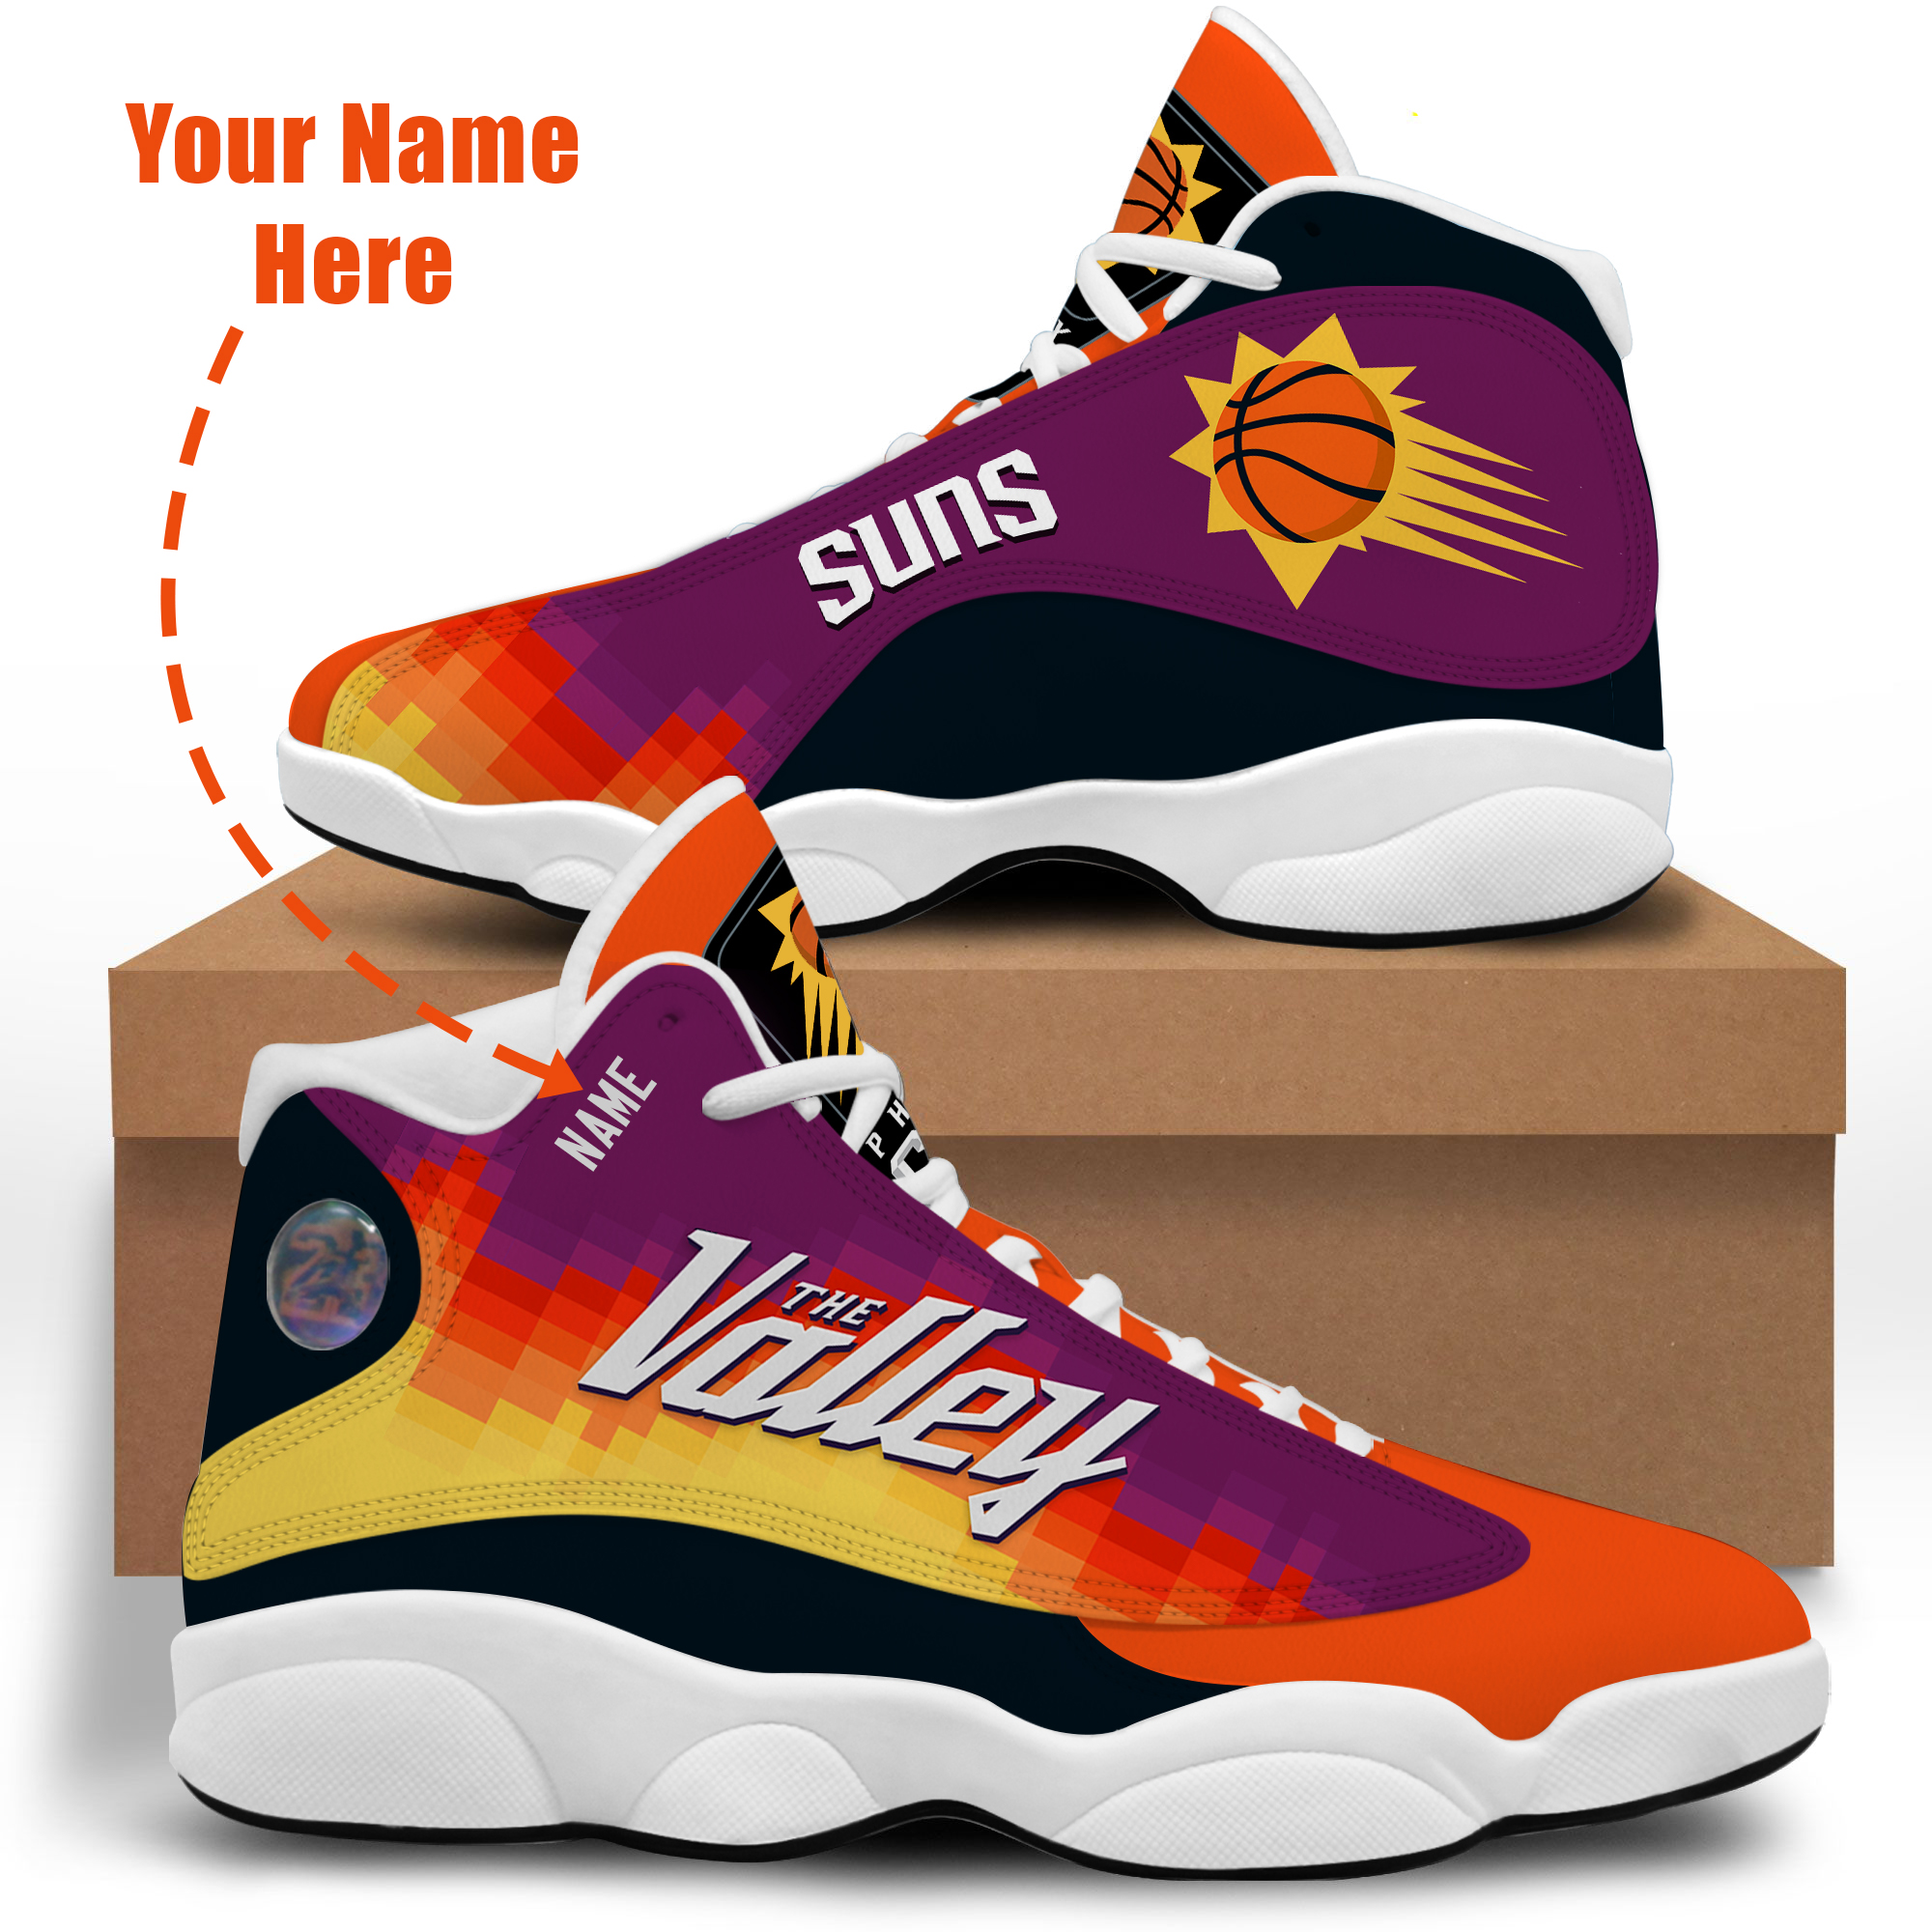 Phoenix Sun custom personalized name air jordan 13 sneaker – LIMITED EDTION